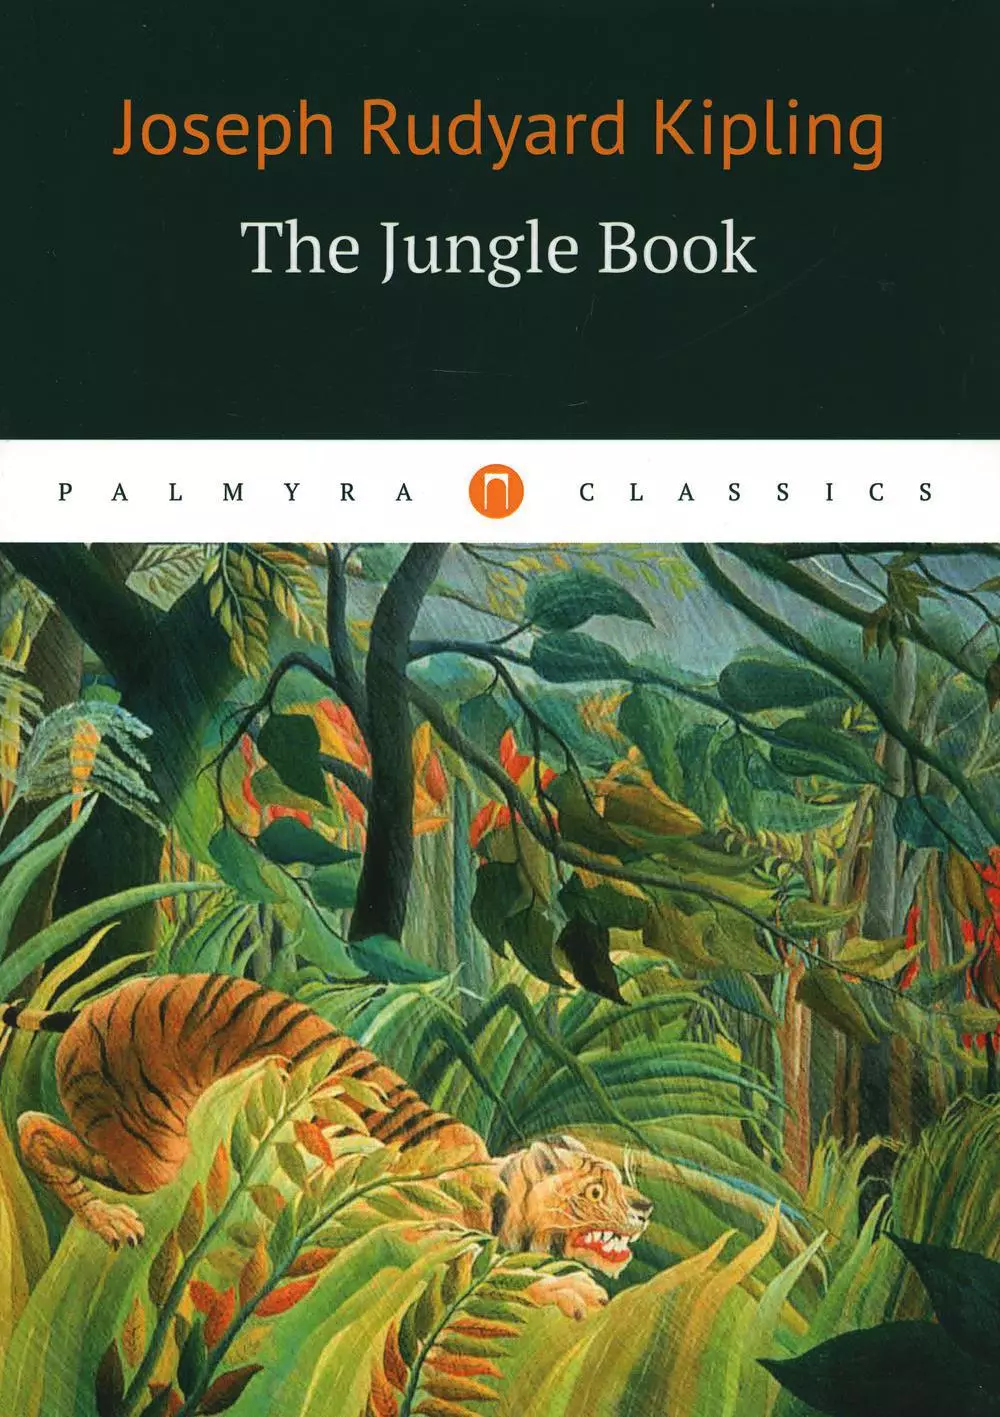 Kipling Joseph Rudyard - The Jungle Book